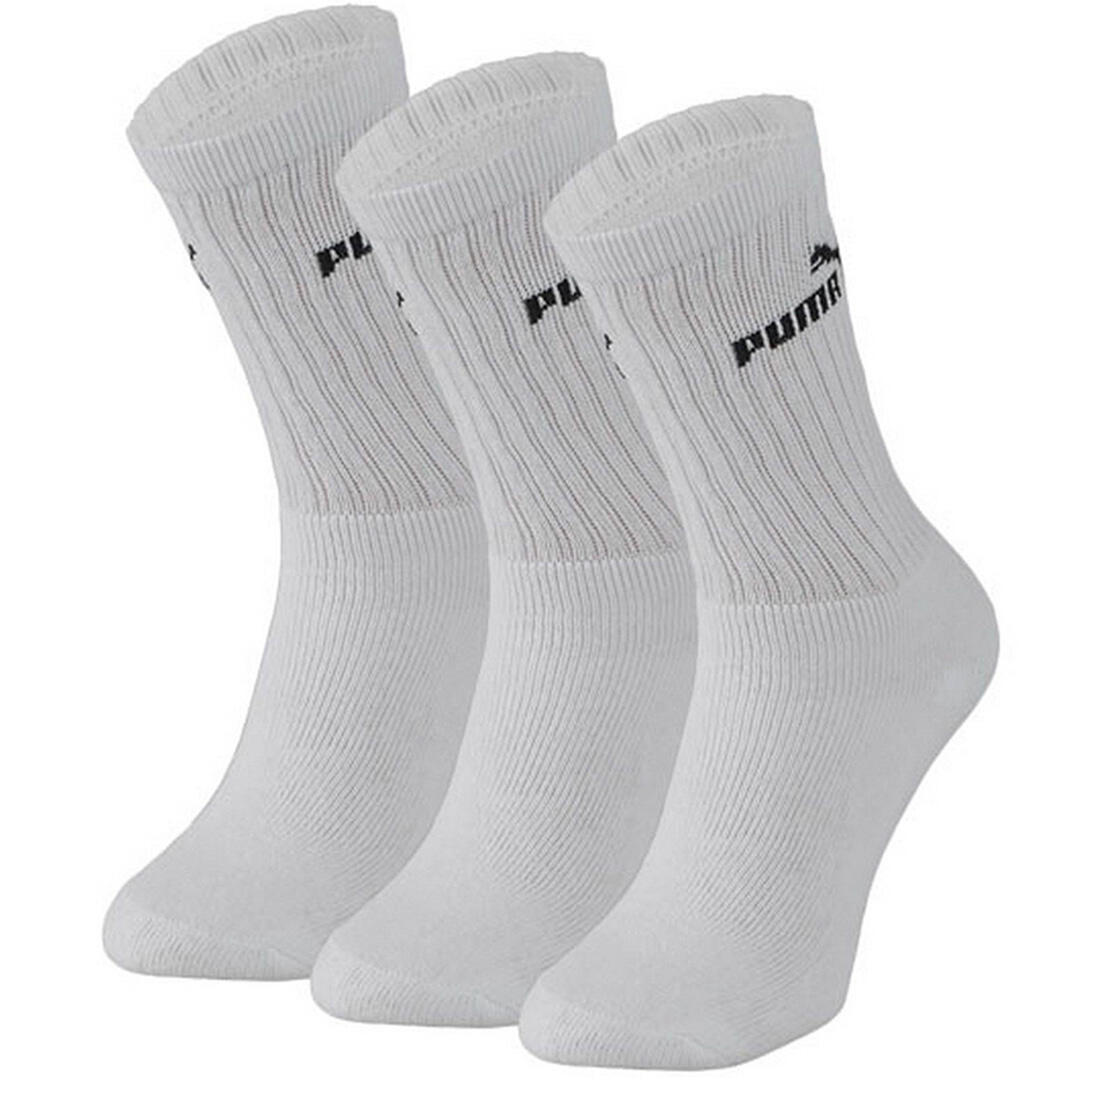 PUMA Unisex Adults Crew Socks (Pack Of 3) (Grey)